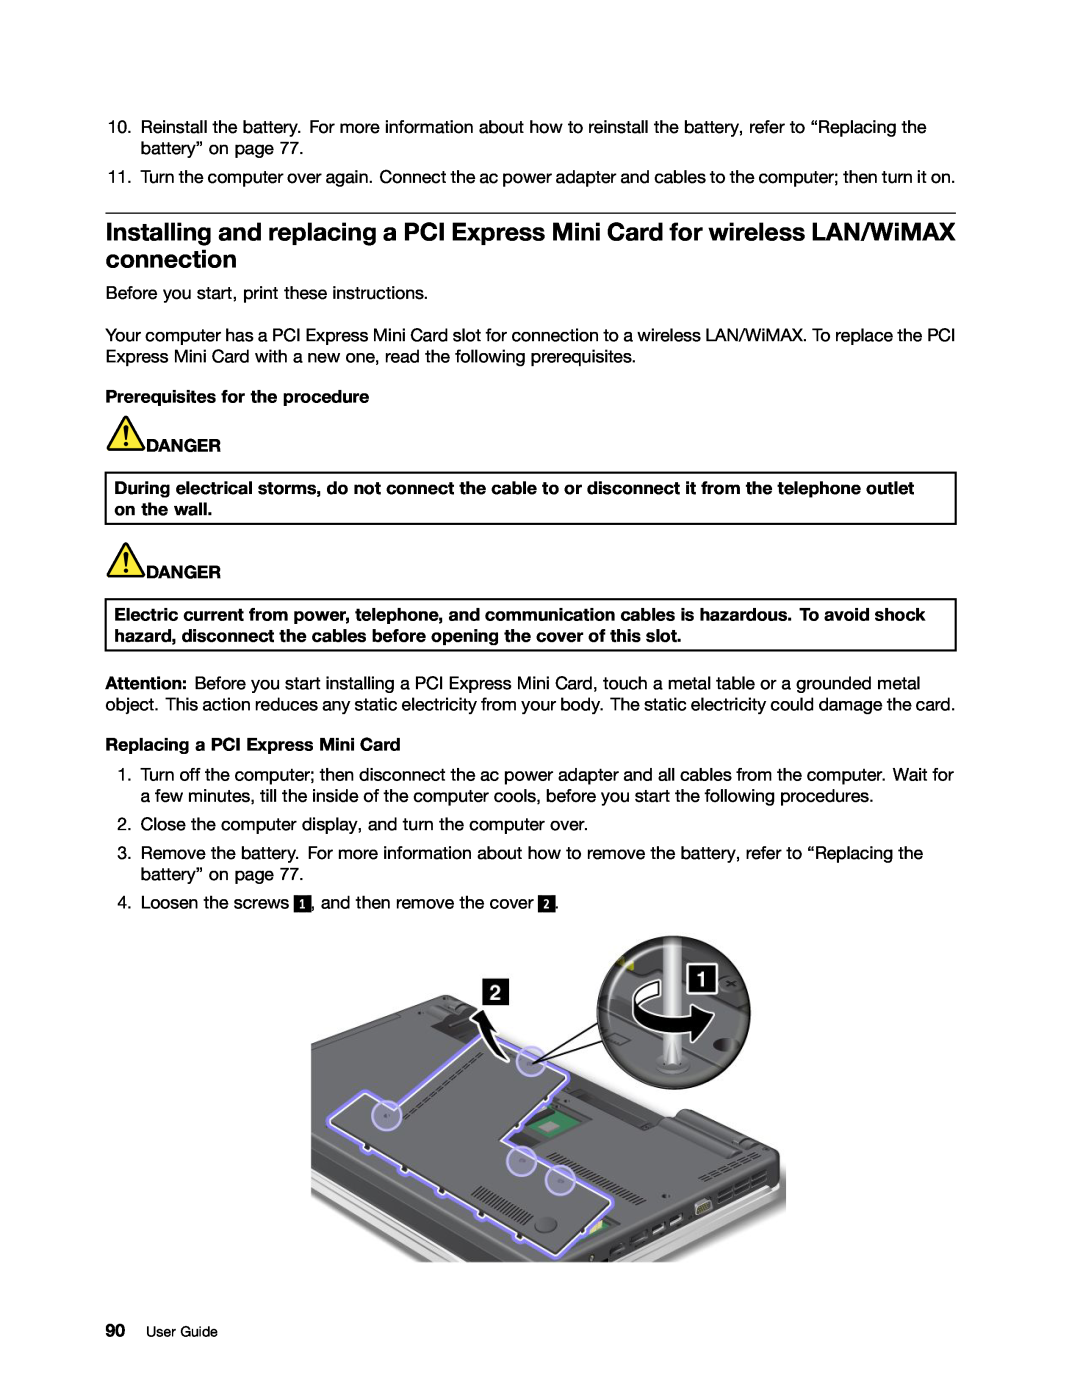 Lenovo E520, E420, 114155U Prerequisites for the procedure DANGER, Danger, Replacing a PCI Express Mini Card, User Guide 